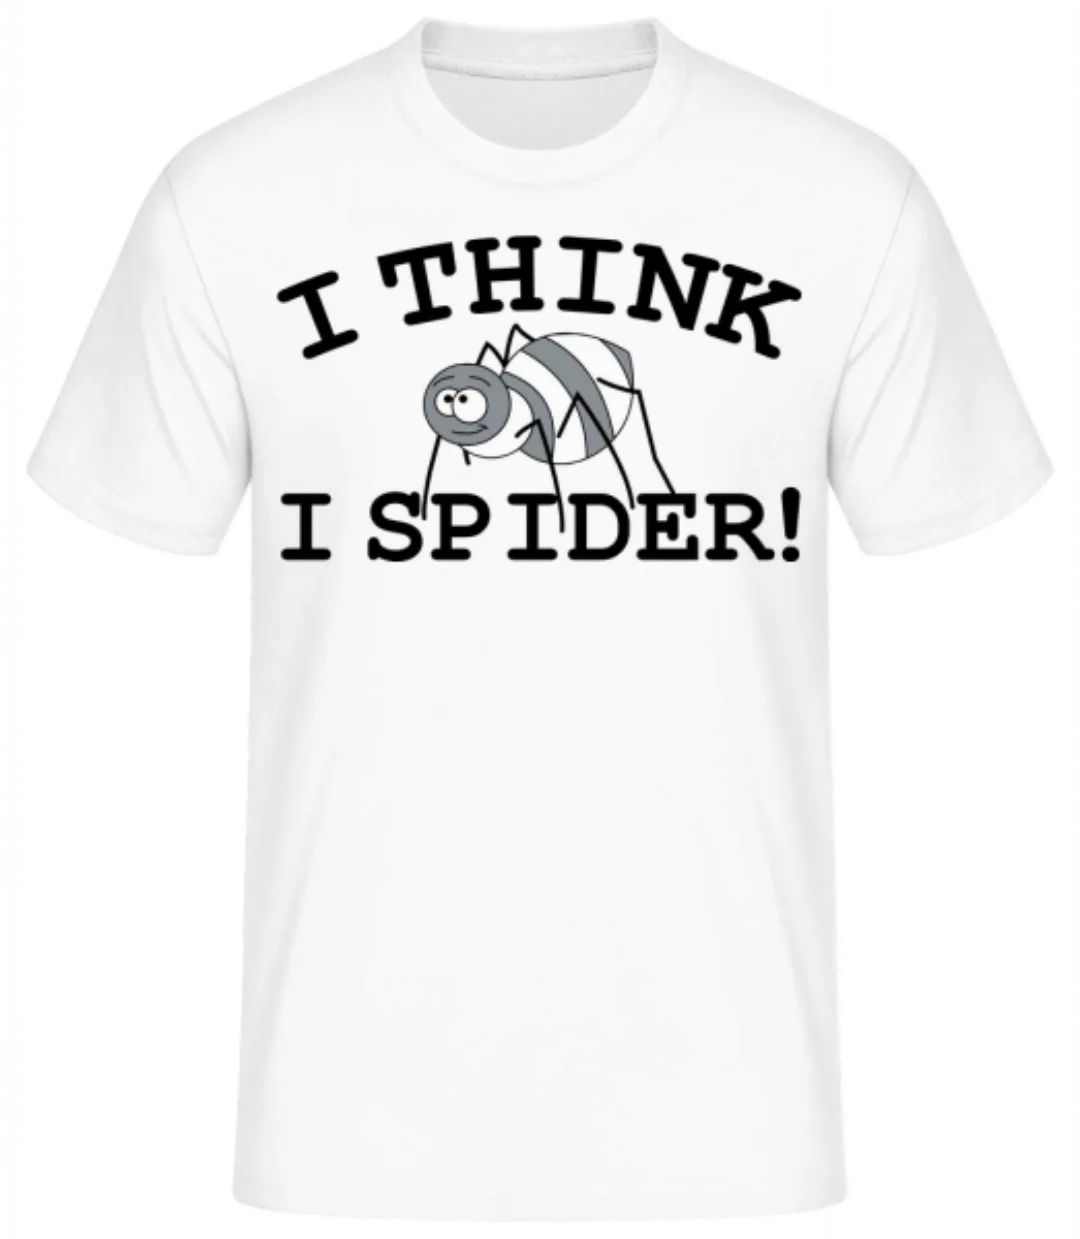 I Think I Spider · Männer Basic T-Shirt günstig online kaufen